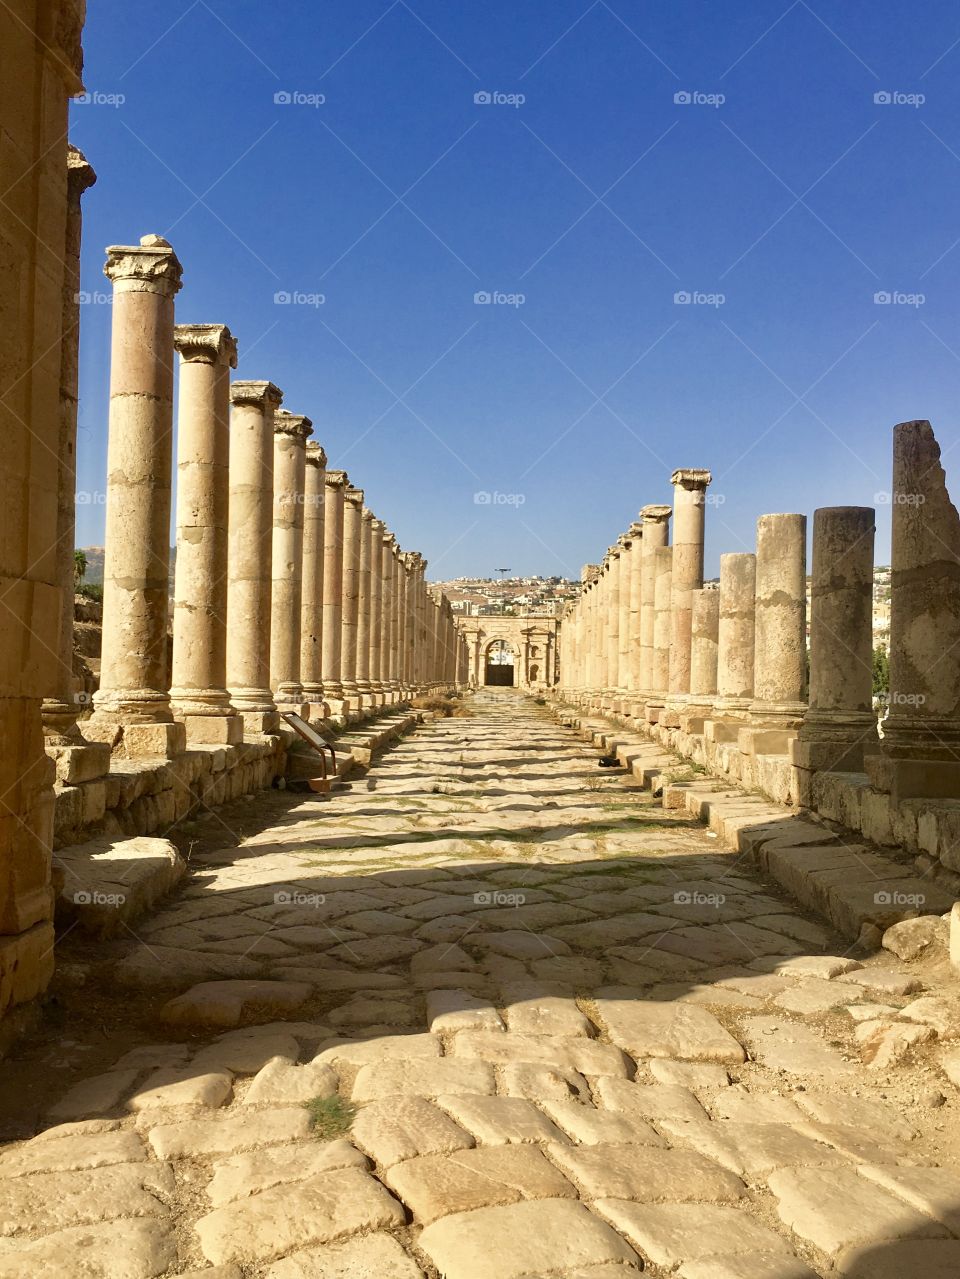 Ancient Roman empire city ruins in Jerash city, Jordan